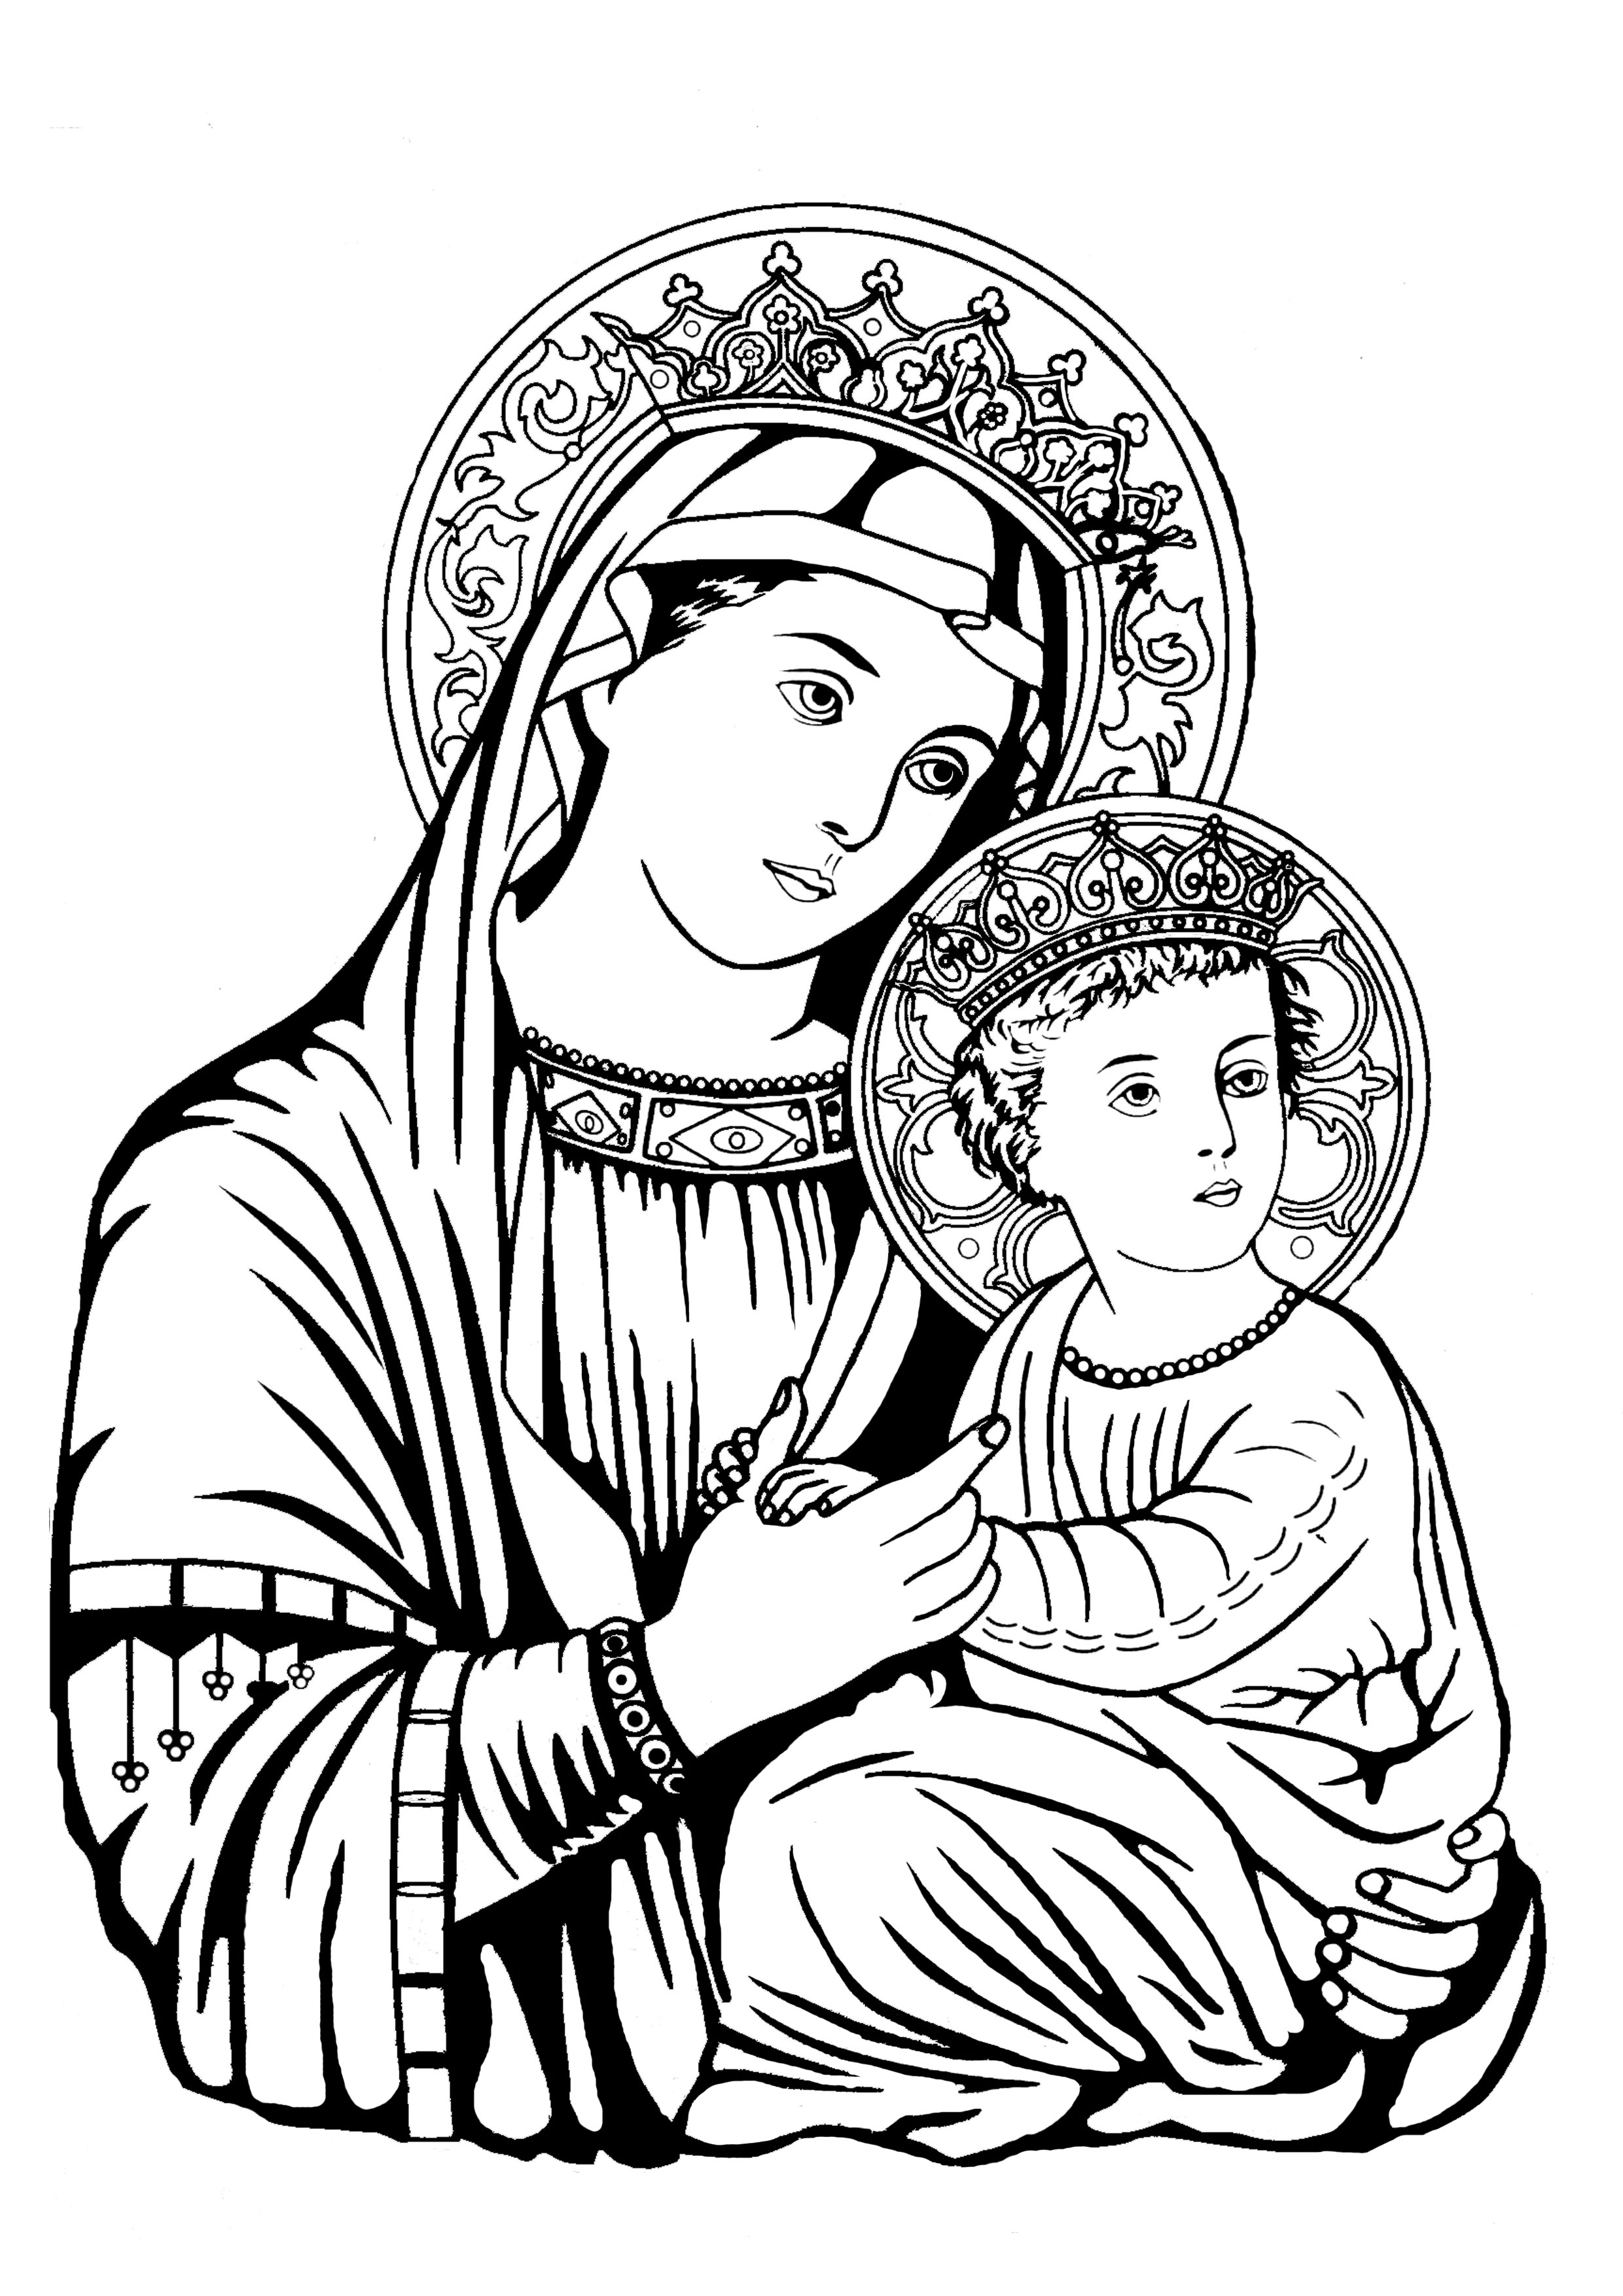 Image: Colouring: Virgin Mary with baby Jesus 05 صورة تلوين القديسة